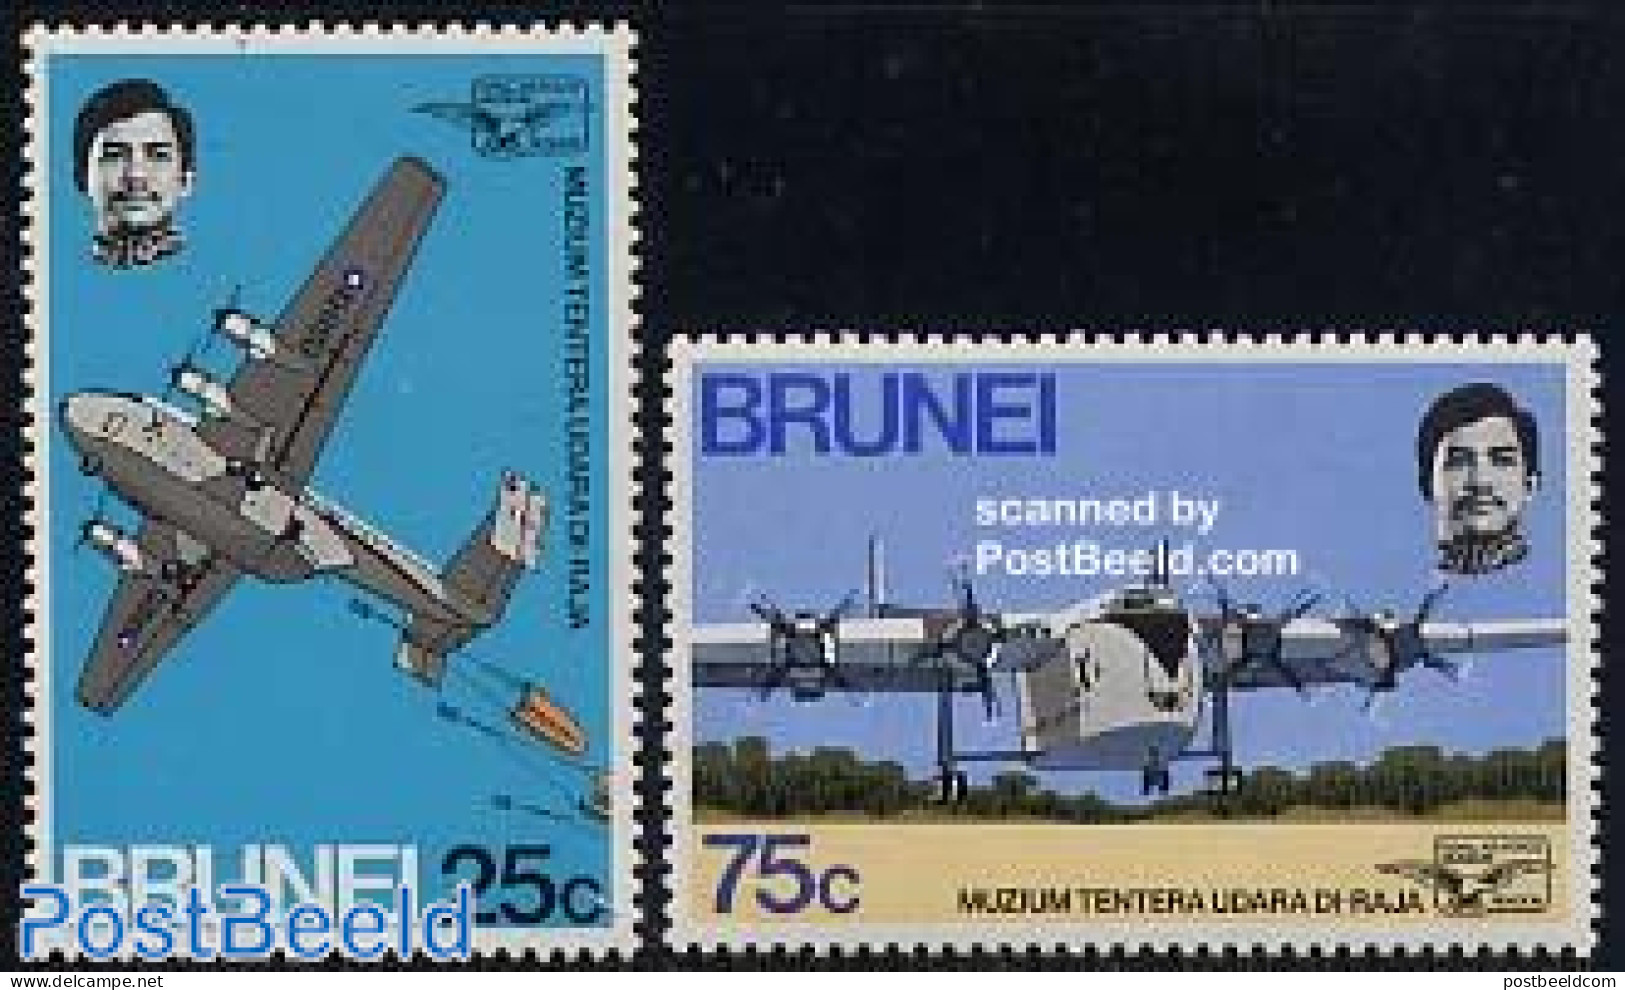 Brunei 1972 Royal Airforce Museum 2v, Mint NH, Transport - Aircraft & Aviation - Art - Museums - Flugzeuge